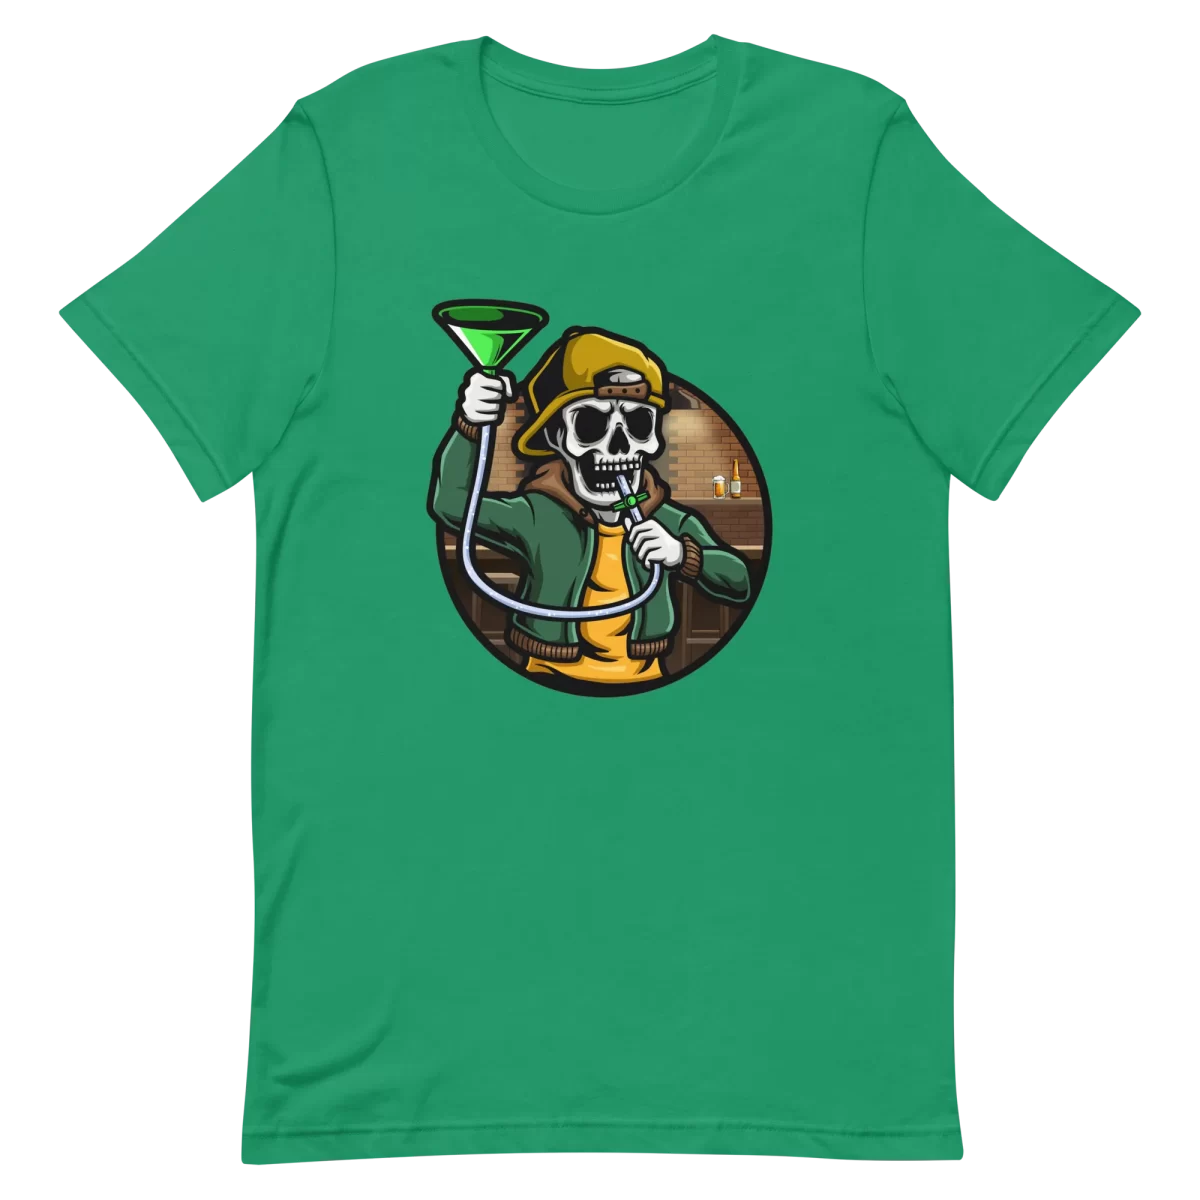 Unisex T-Shirt - Beer Bong Skull - Kelly